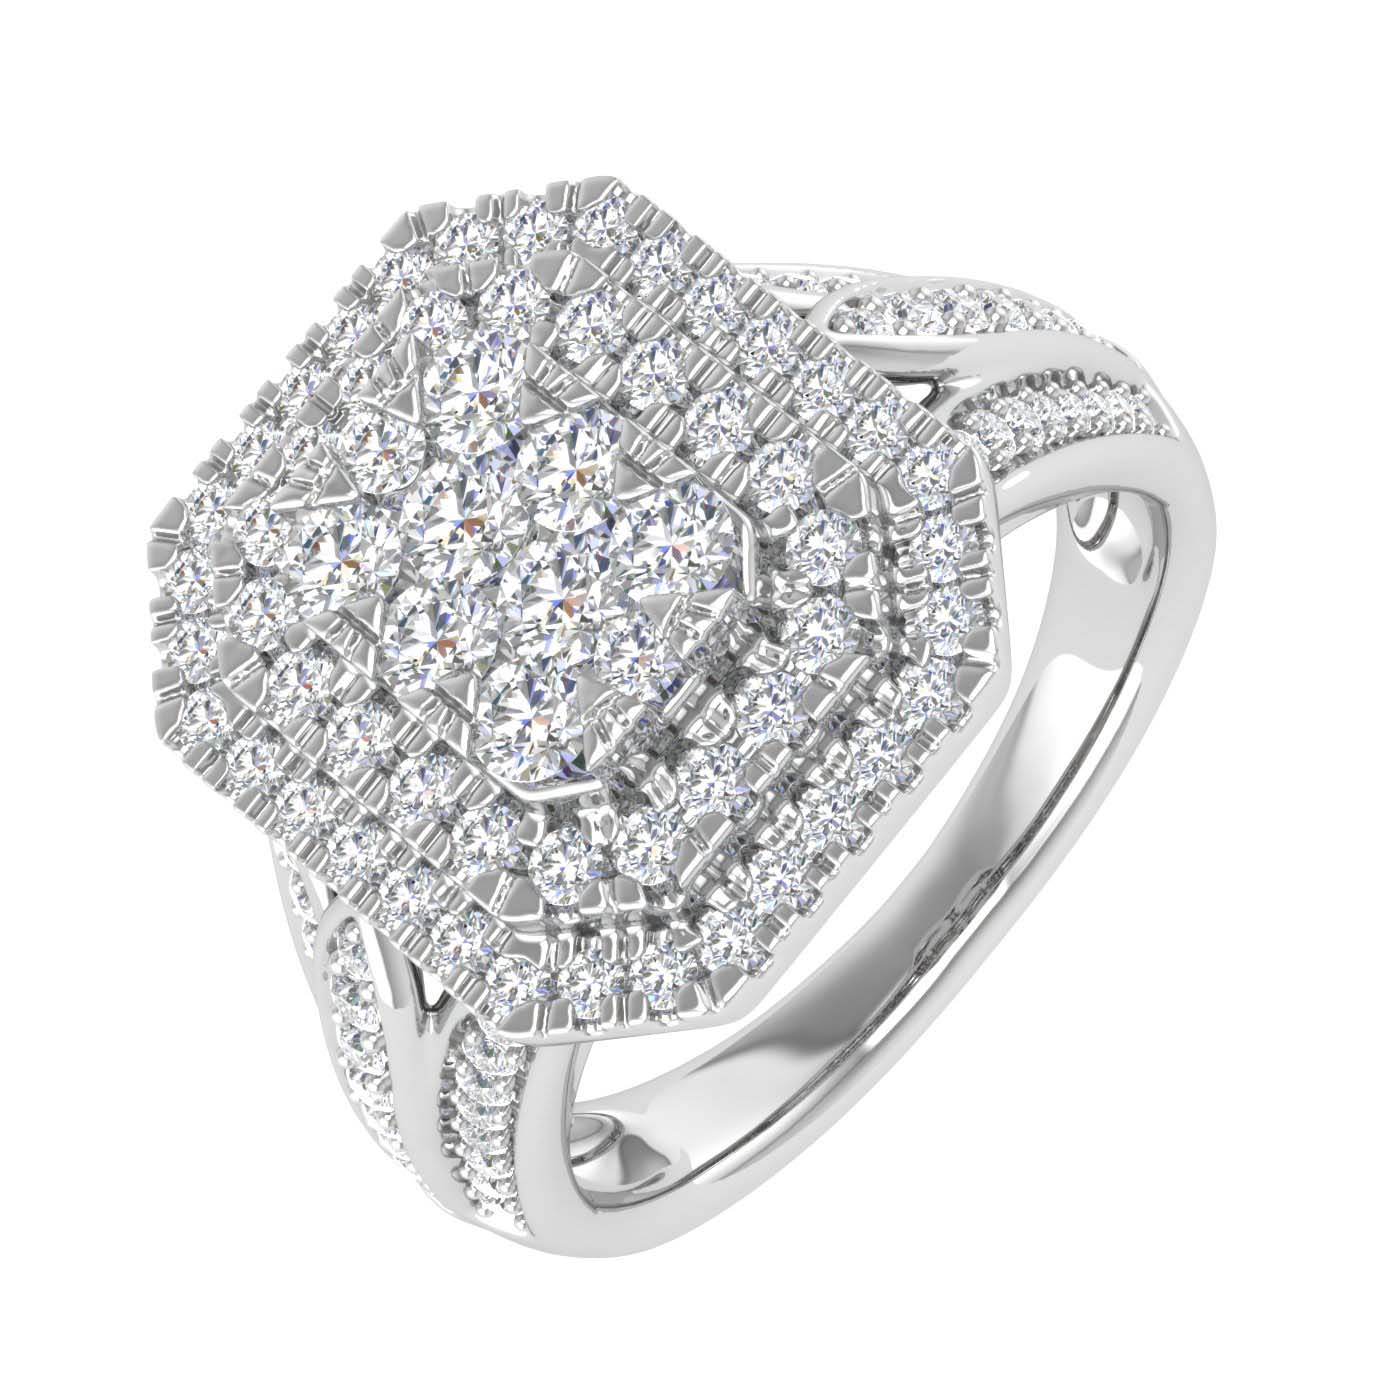 1 Carat Cushion Cut Diamond Engagement Ring in Gold – FINEROCK